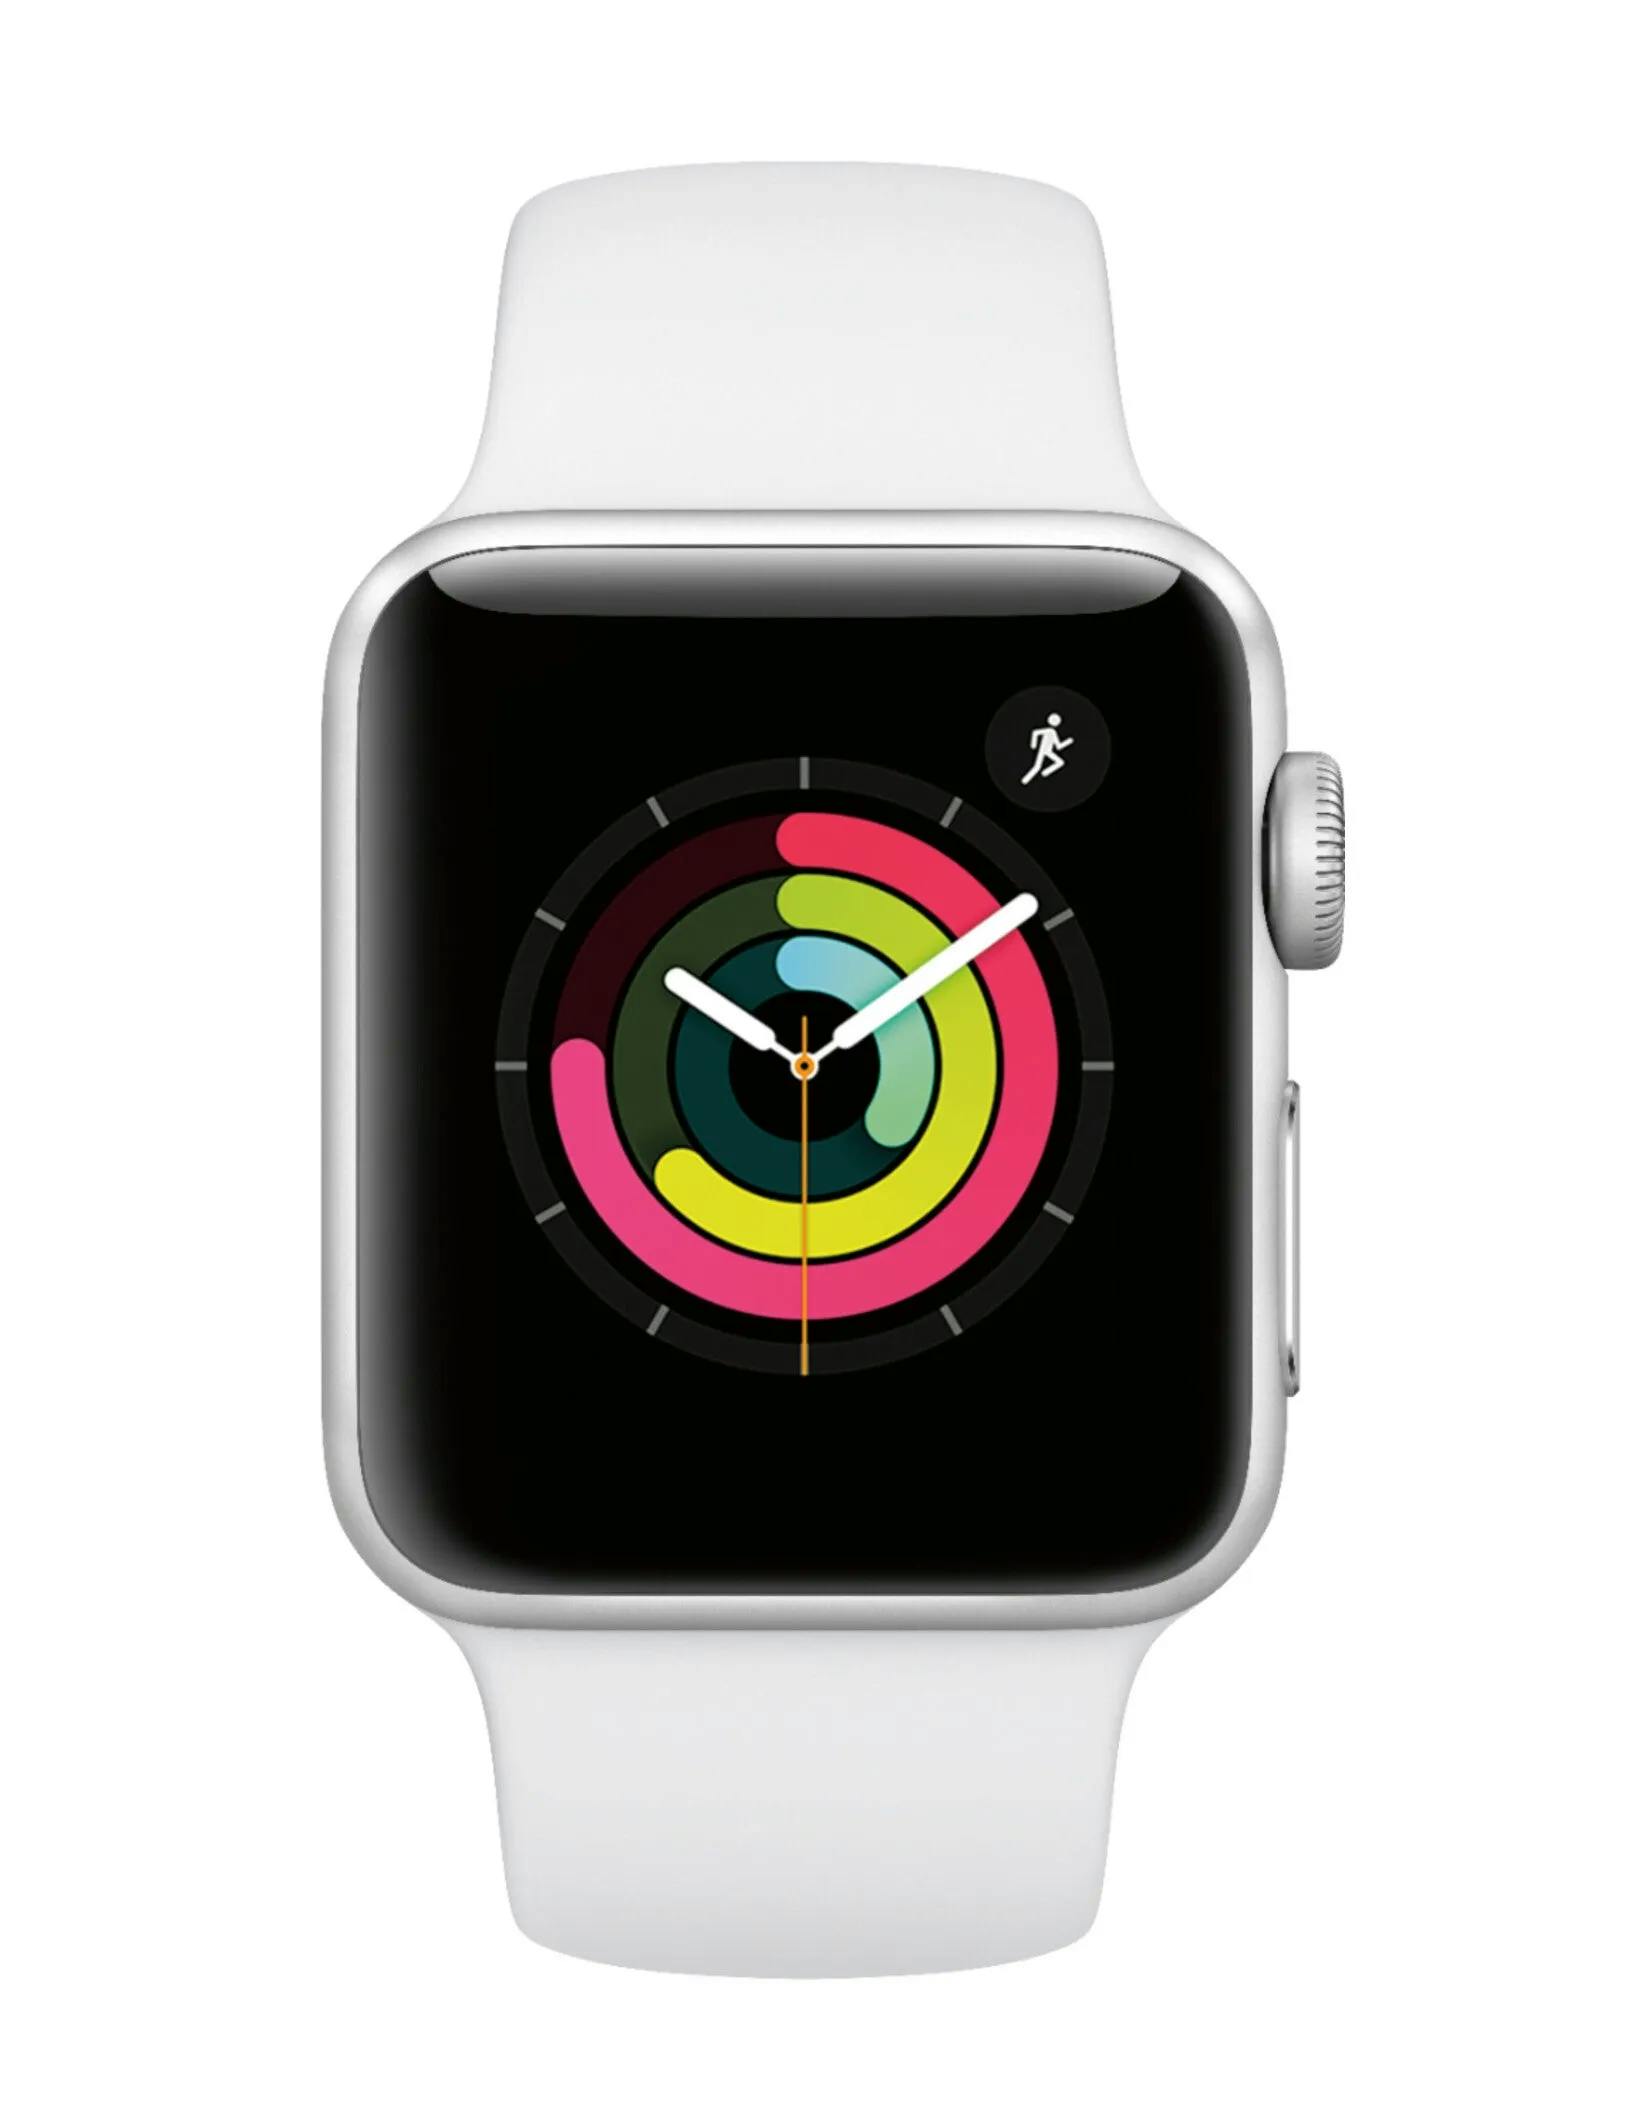 Imagem Apple Watch Series 3 (38mm)